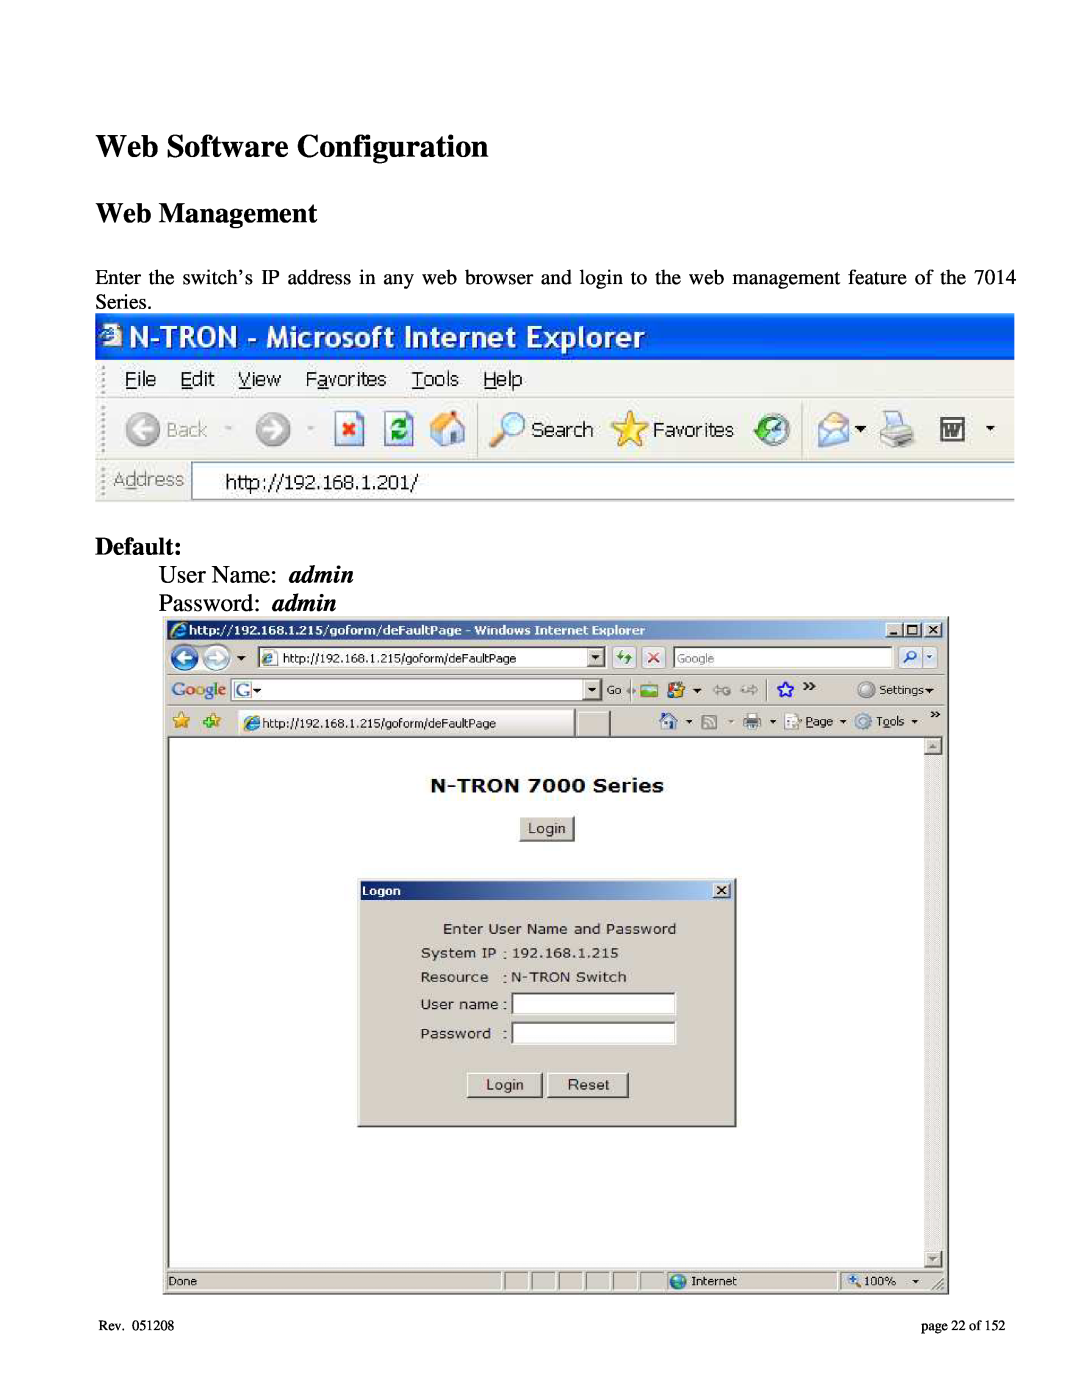 Gigabyte 7014 user manual Web Management, Default, User Name admin Password admin, Web Software Configuration 